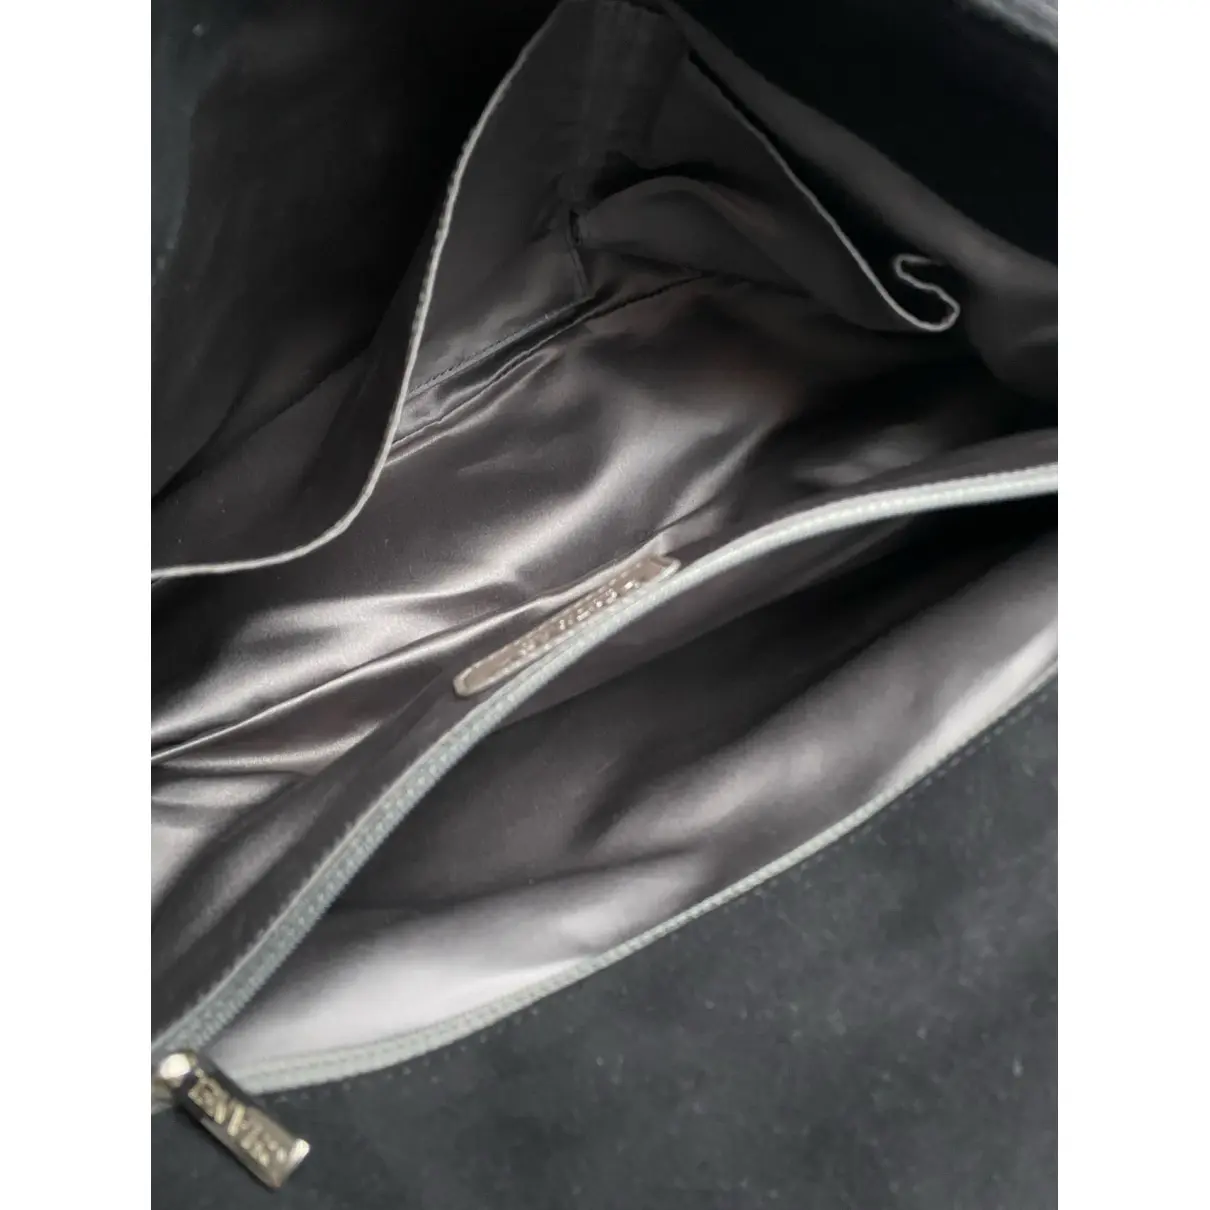 Buy Chanel 2.55 Long cloth handbag online